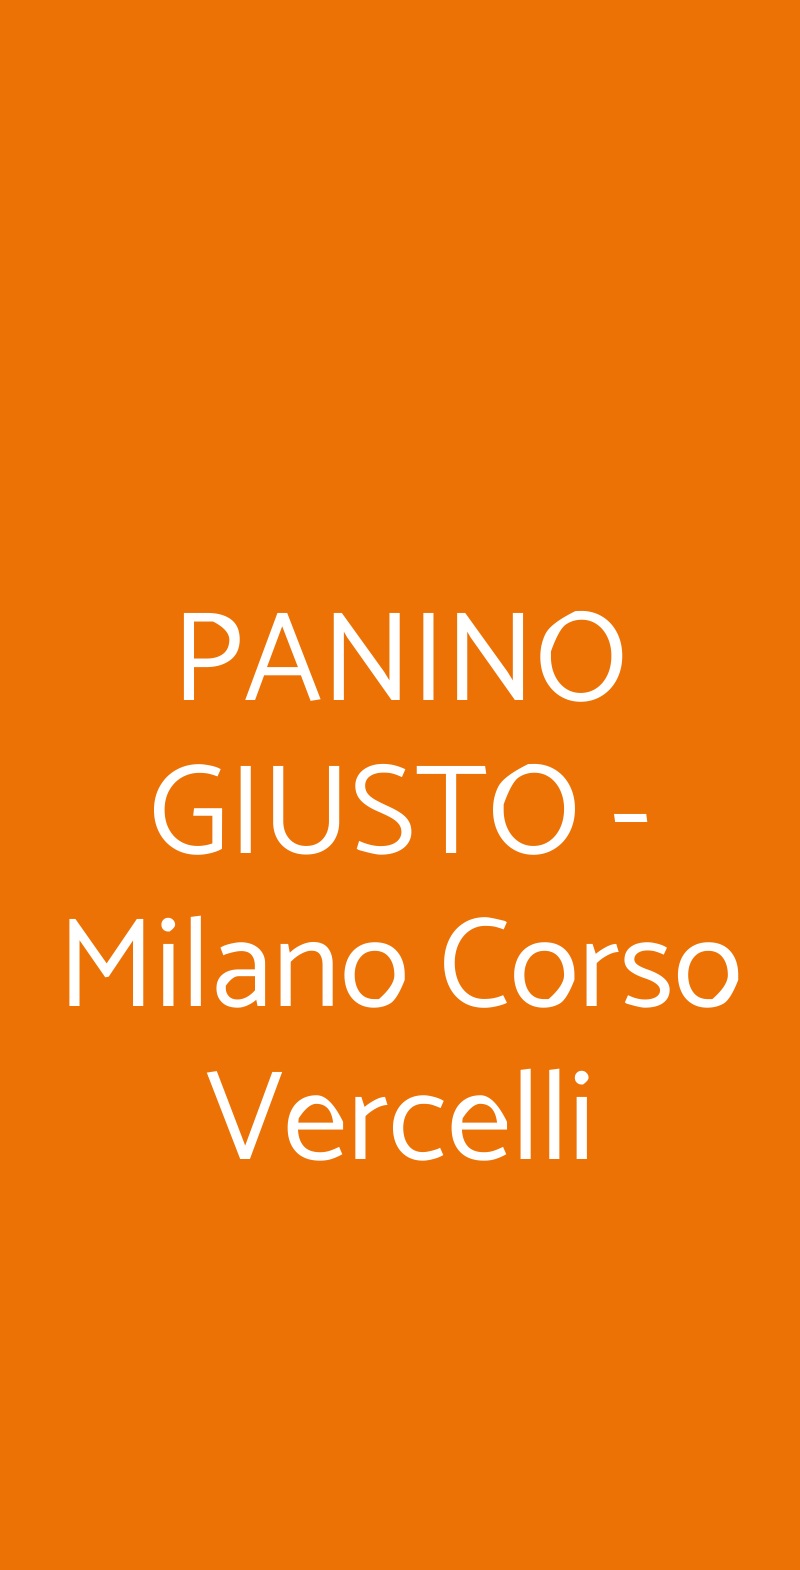 PANINO GIUSTO - Milano Corso Vercelli Milano menù 1 pagina